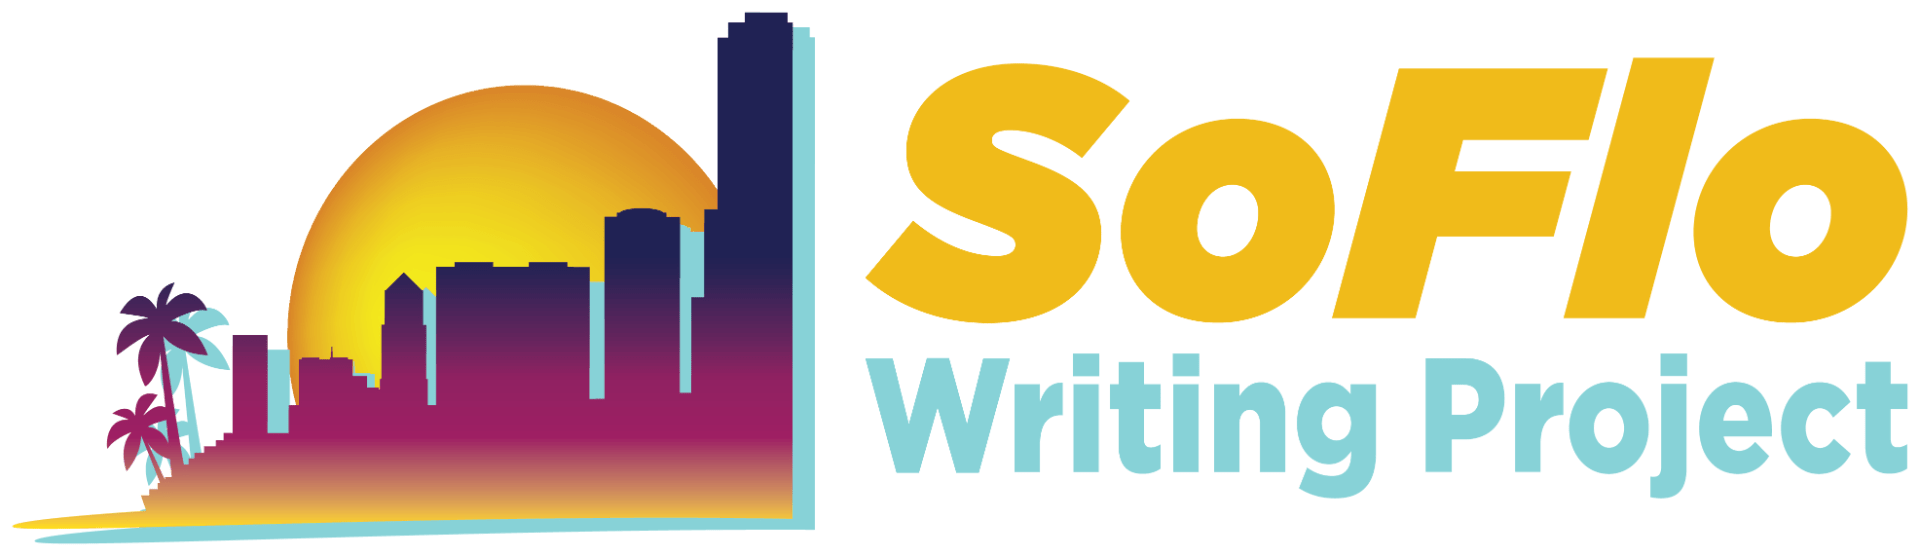 SoFlo Writing Project Banner Logo